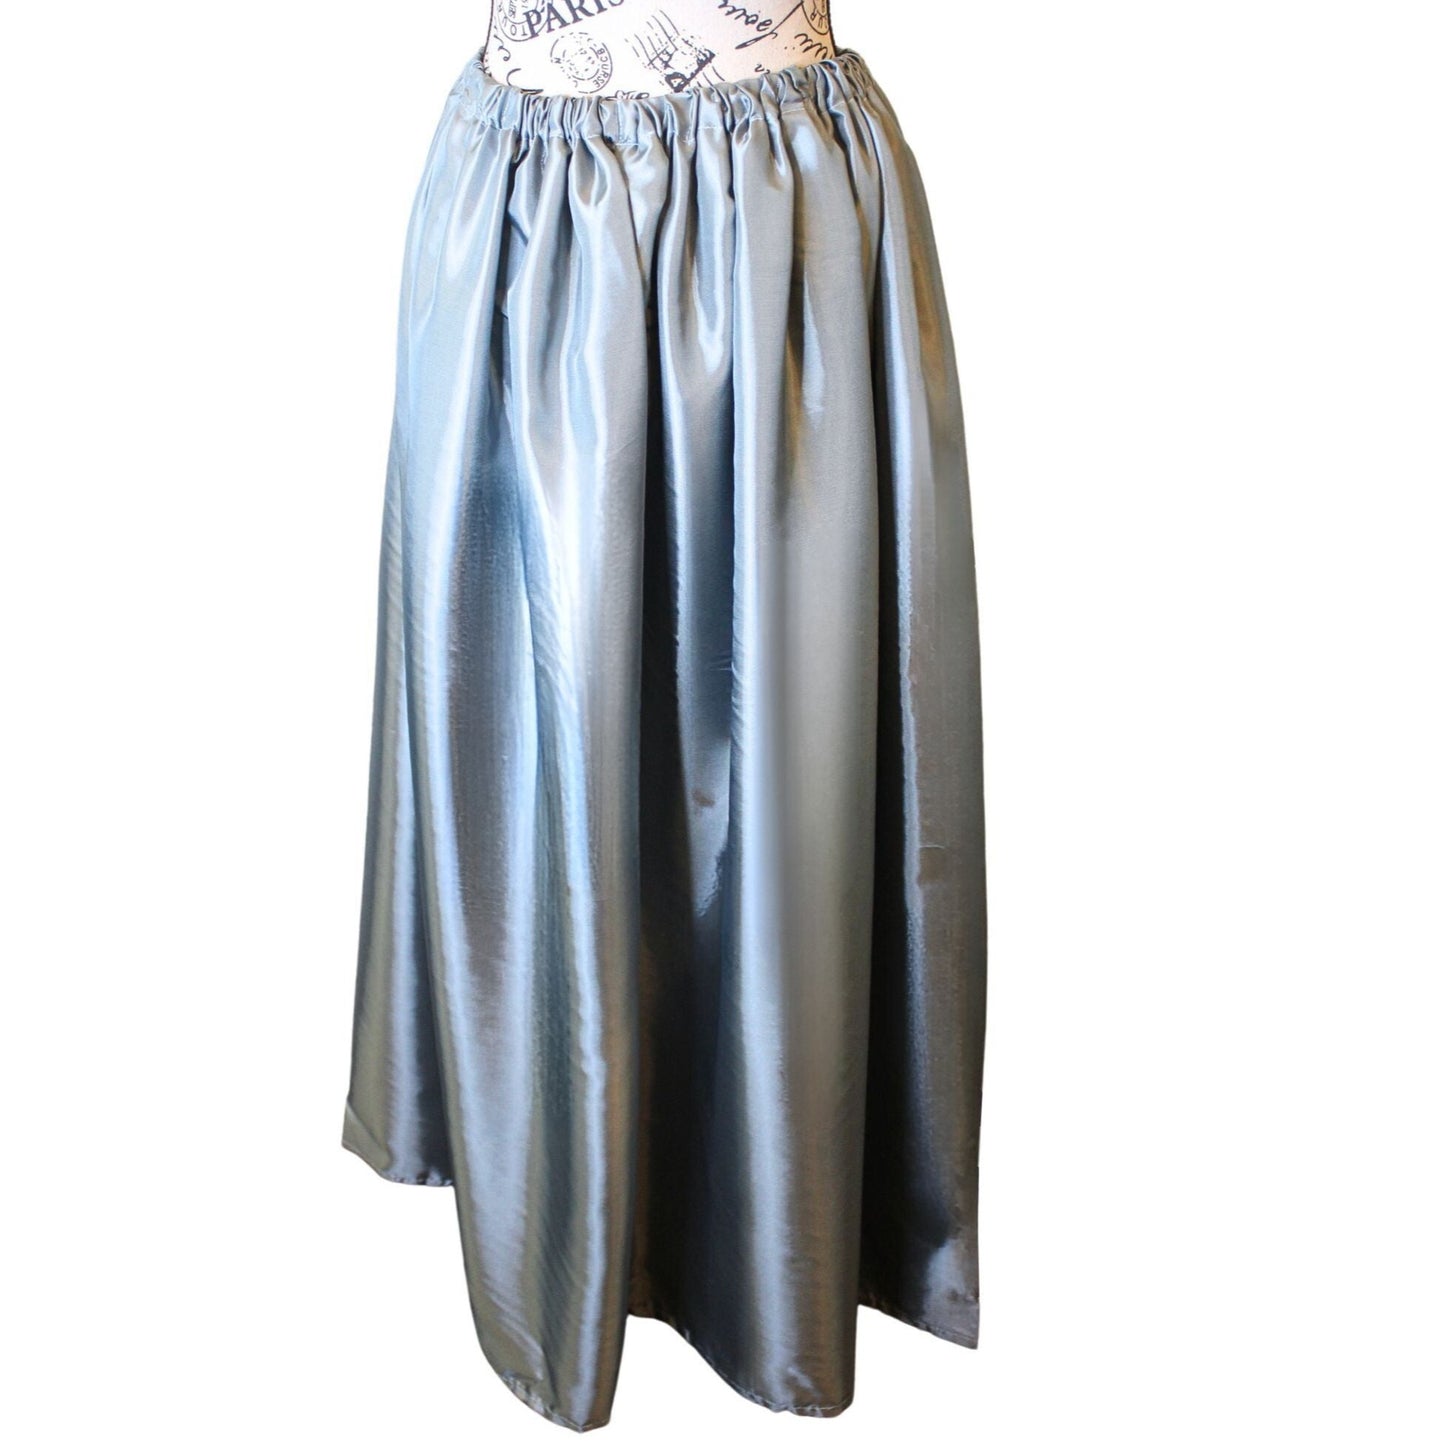 The VM Princess Skirt